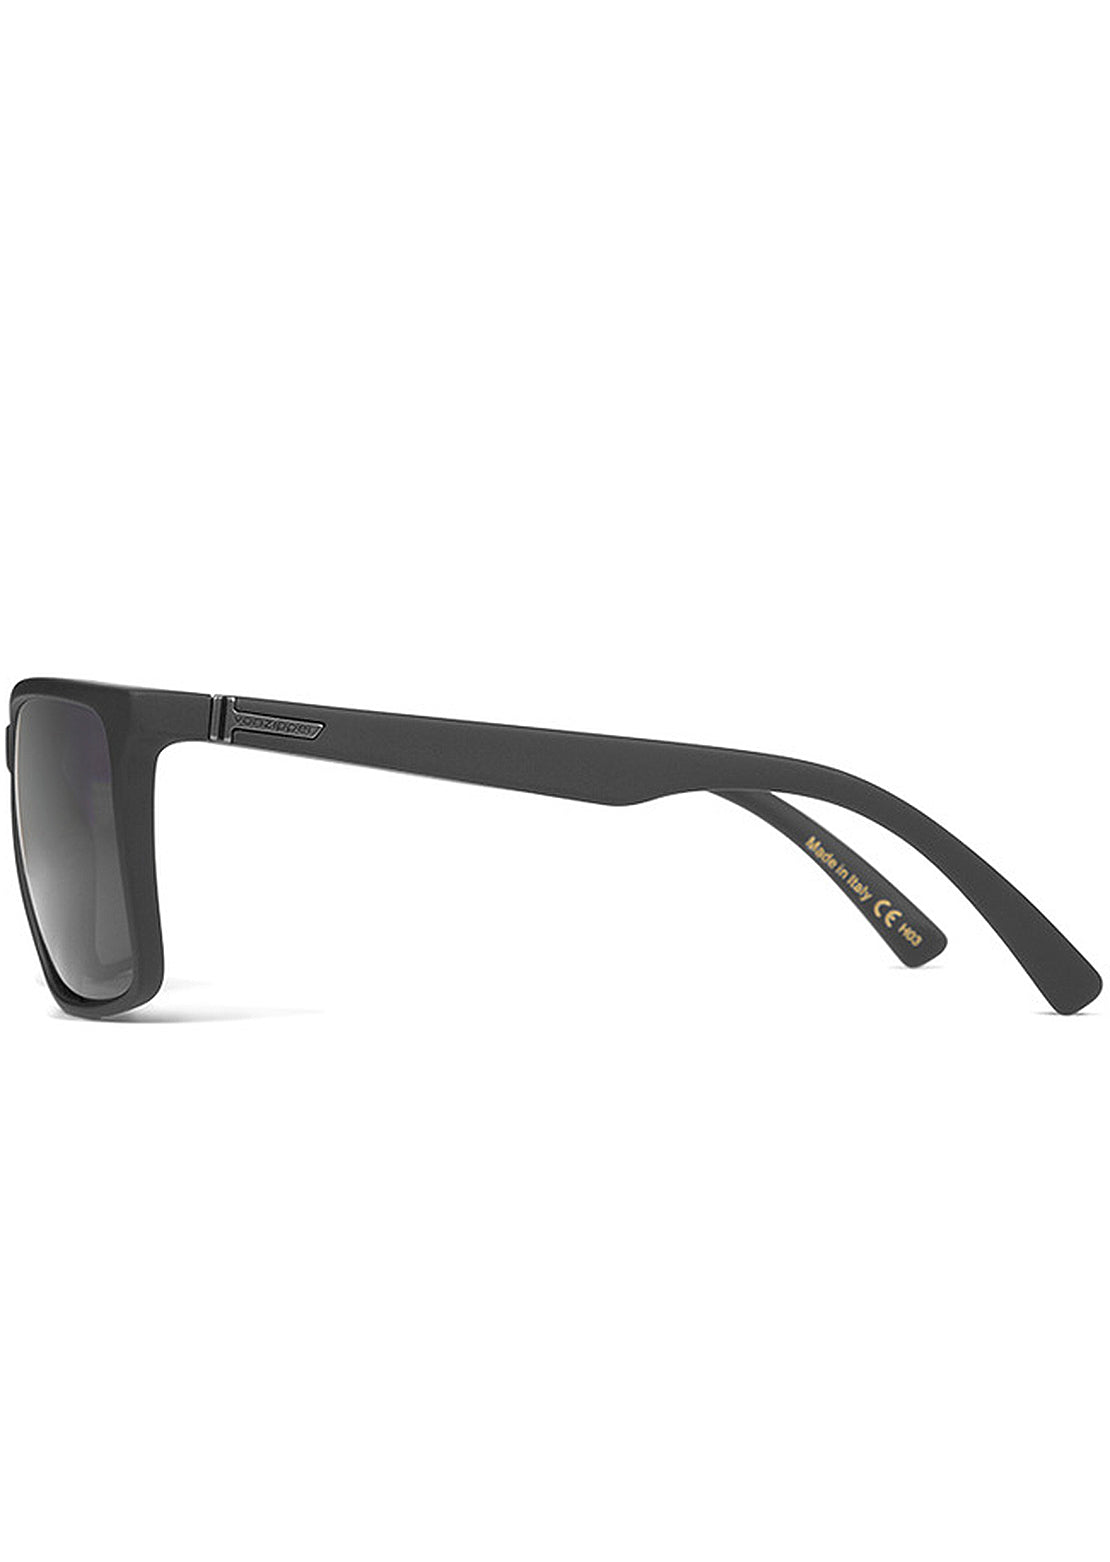 Von Zipper Lesmore Sunglasses Black Satin/Grey